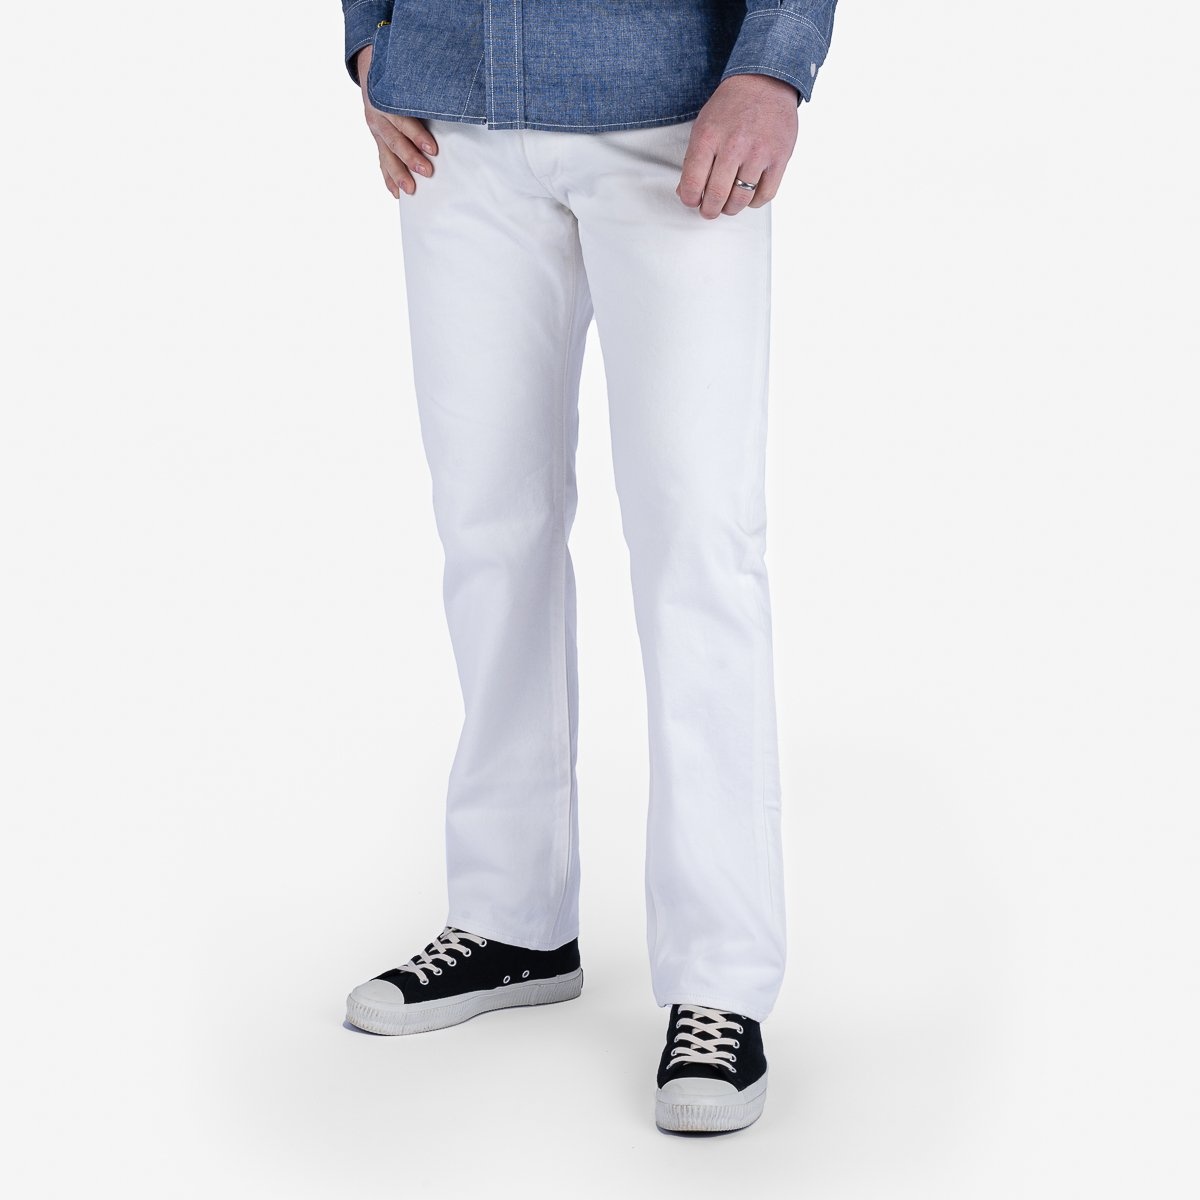 IH-888-WT 13.5oz Denim Medium/High Rise Tapered Cut Jeans - White - 2